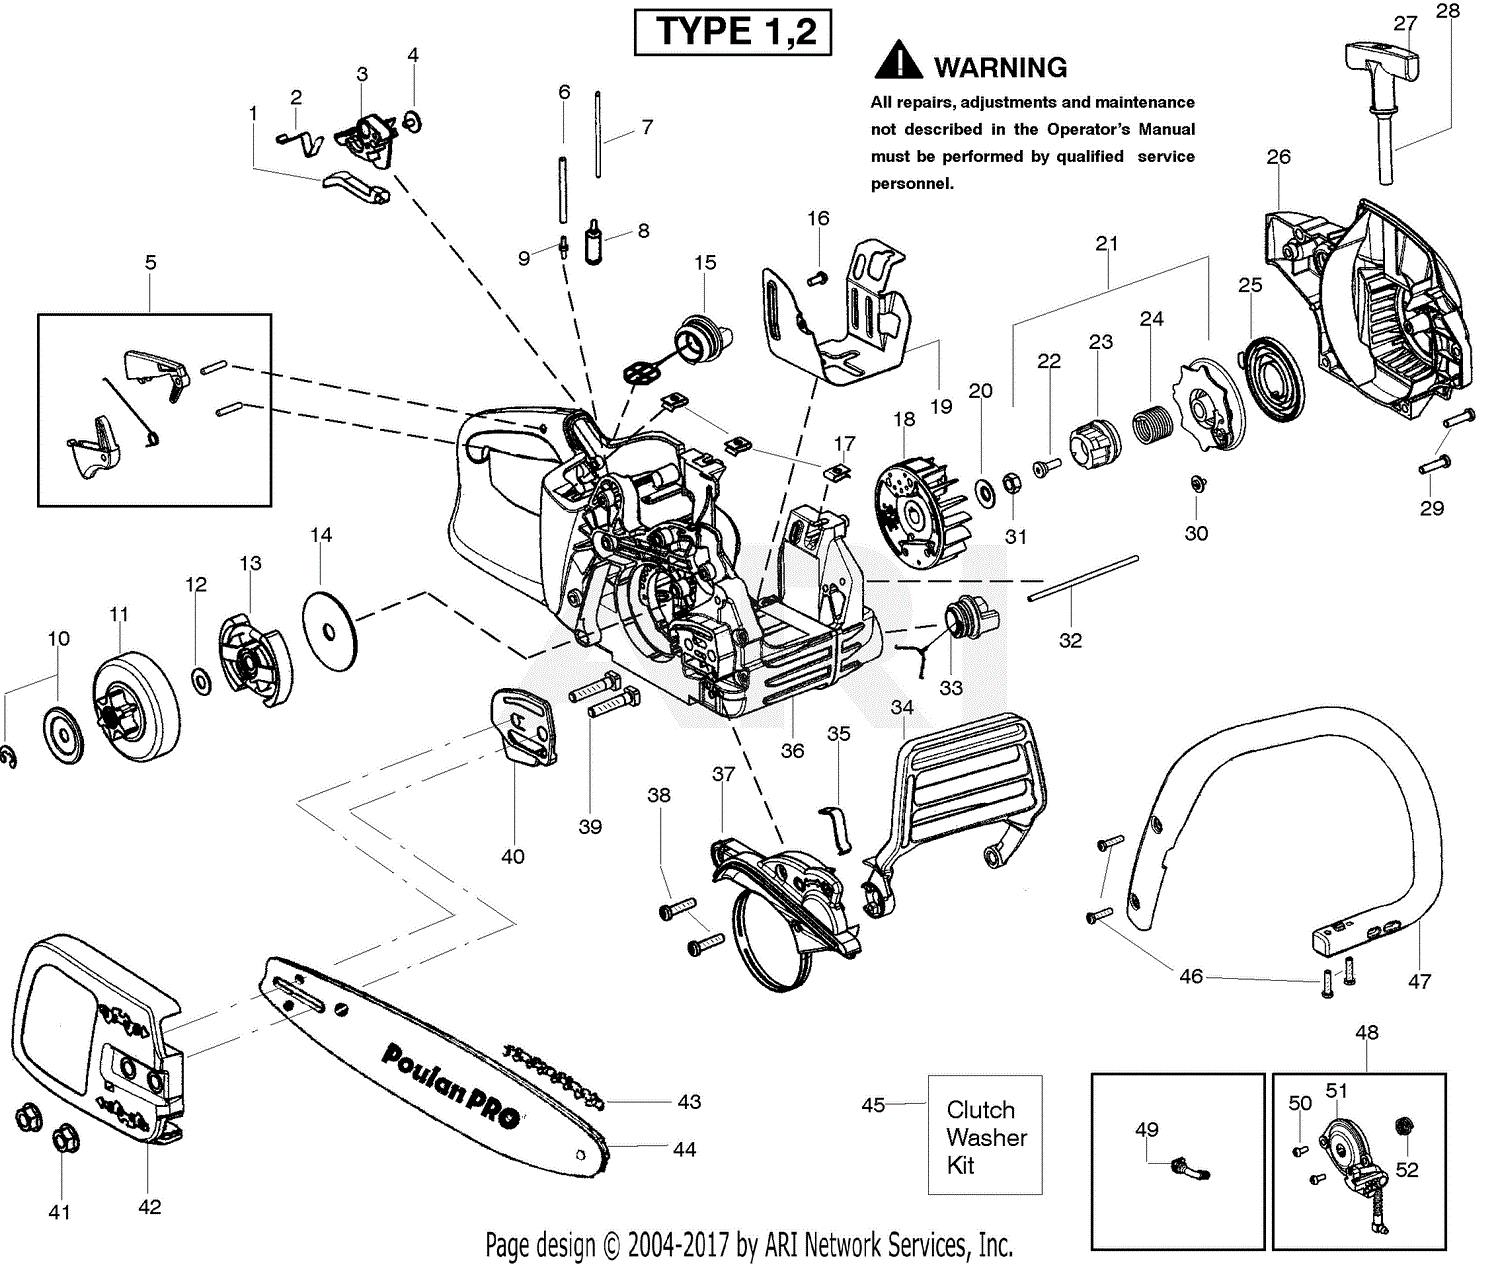 Poulan Pro 42cc Chainsaw Parts Diagram Wiring Site Resource